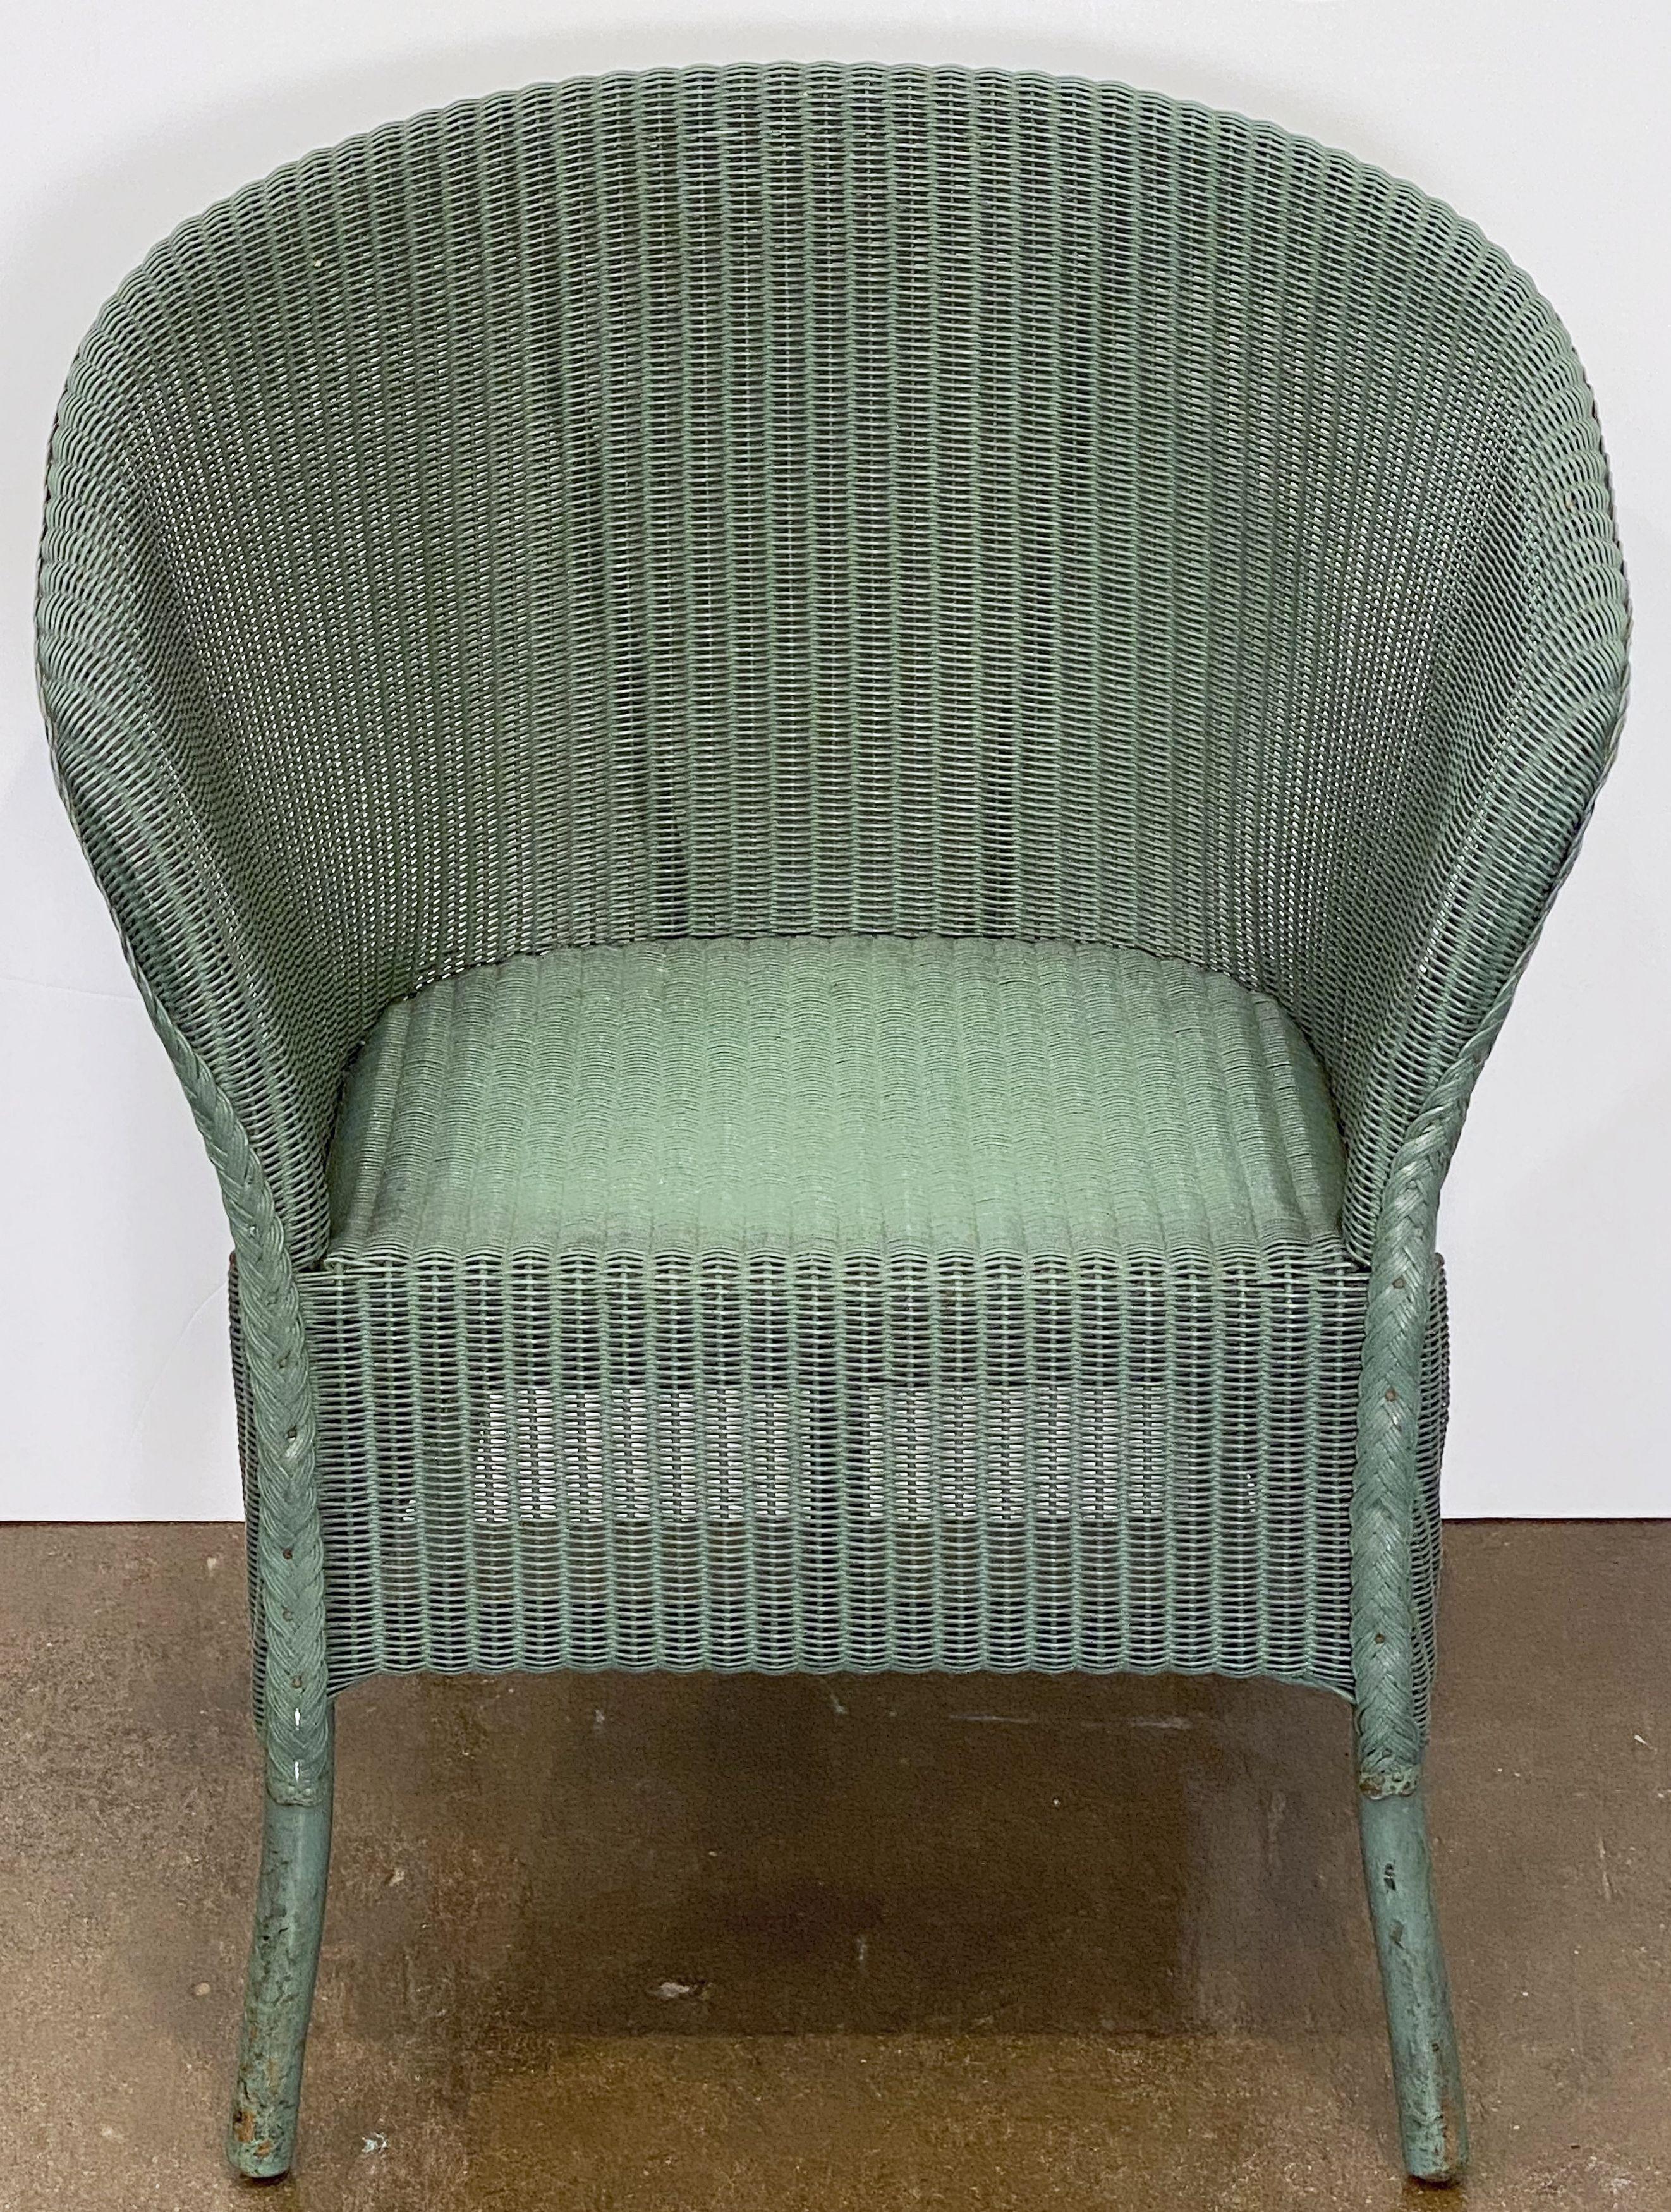 Woven English Wicker Garden or Lounge Chair by Lloyd Loom